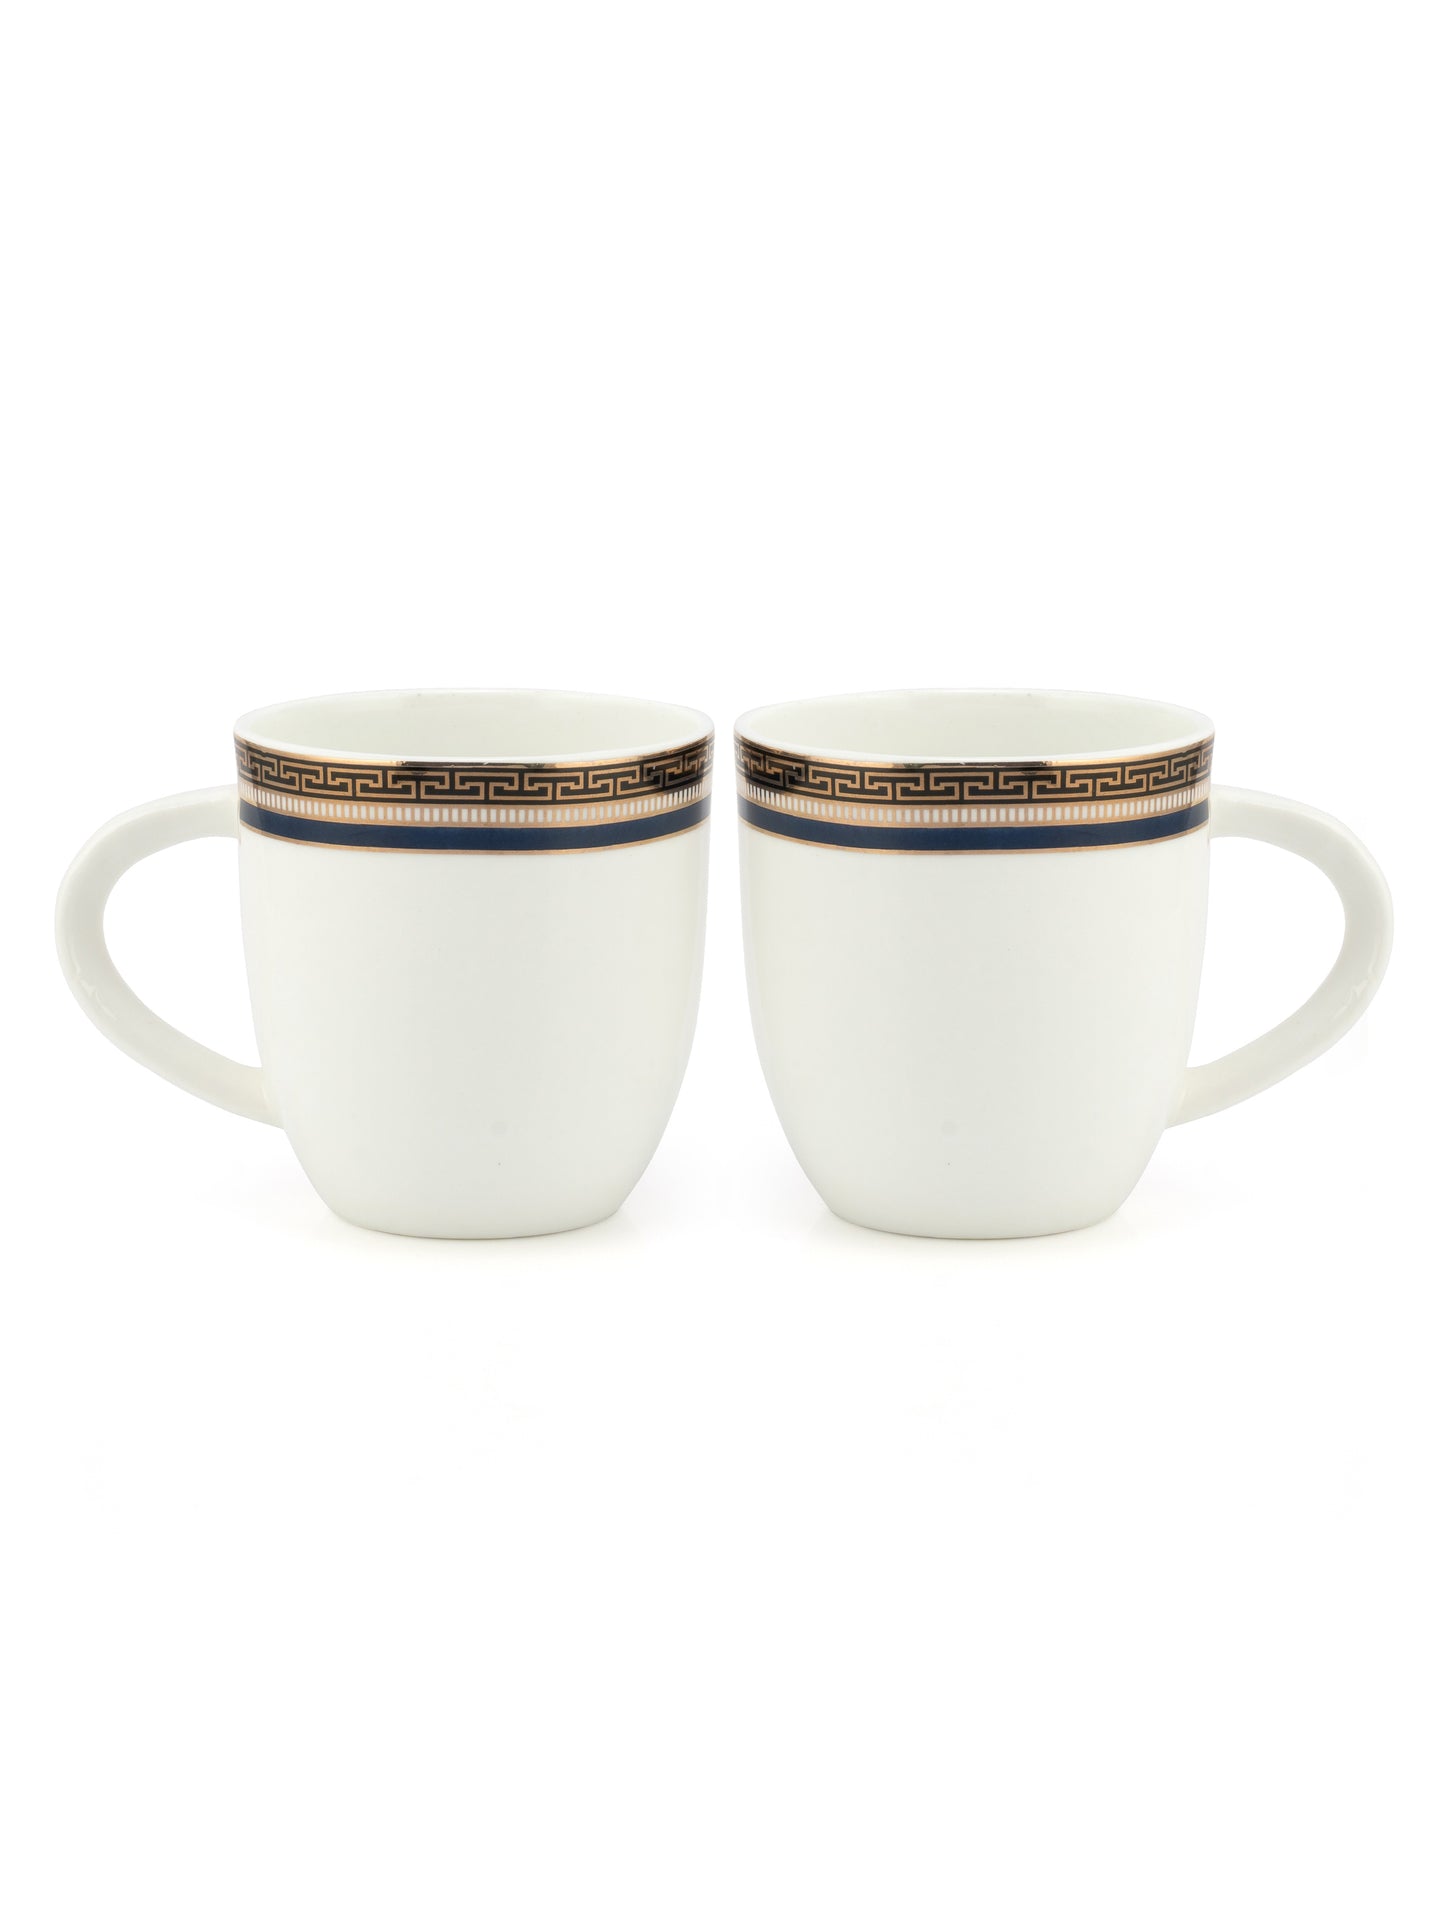 JCPL Aroma Skylight Coffee Mug/ Tea Cup, 220ml, Set of 6, Italia (AS12)